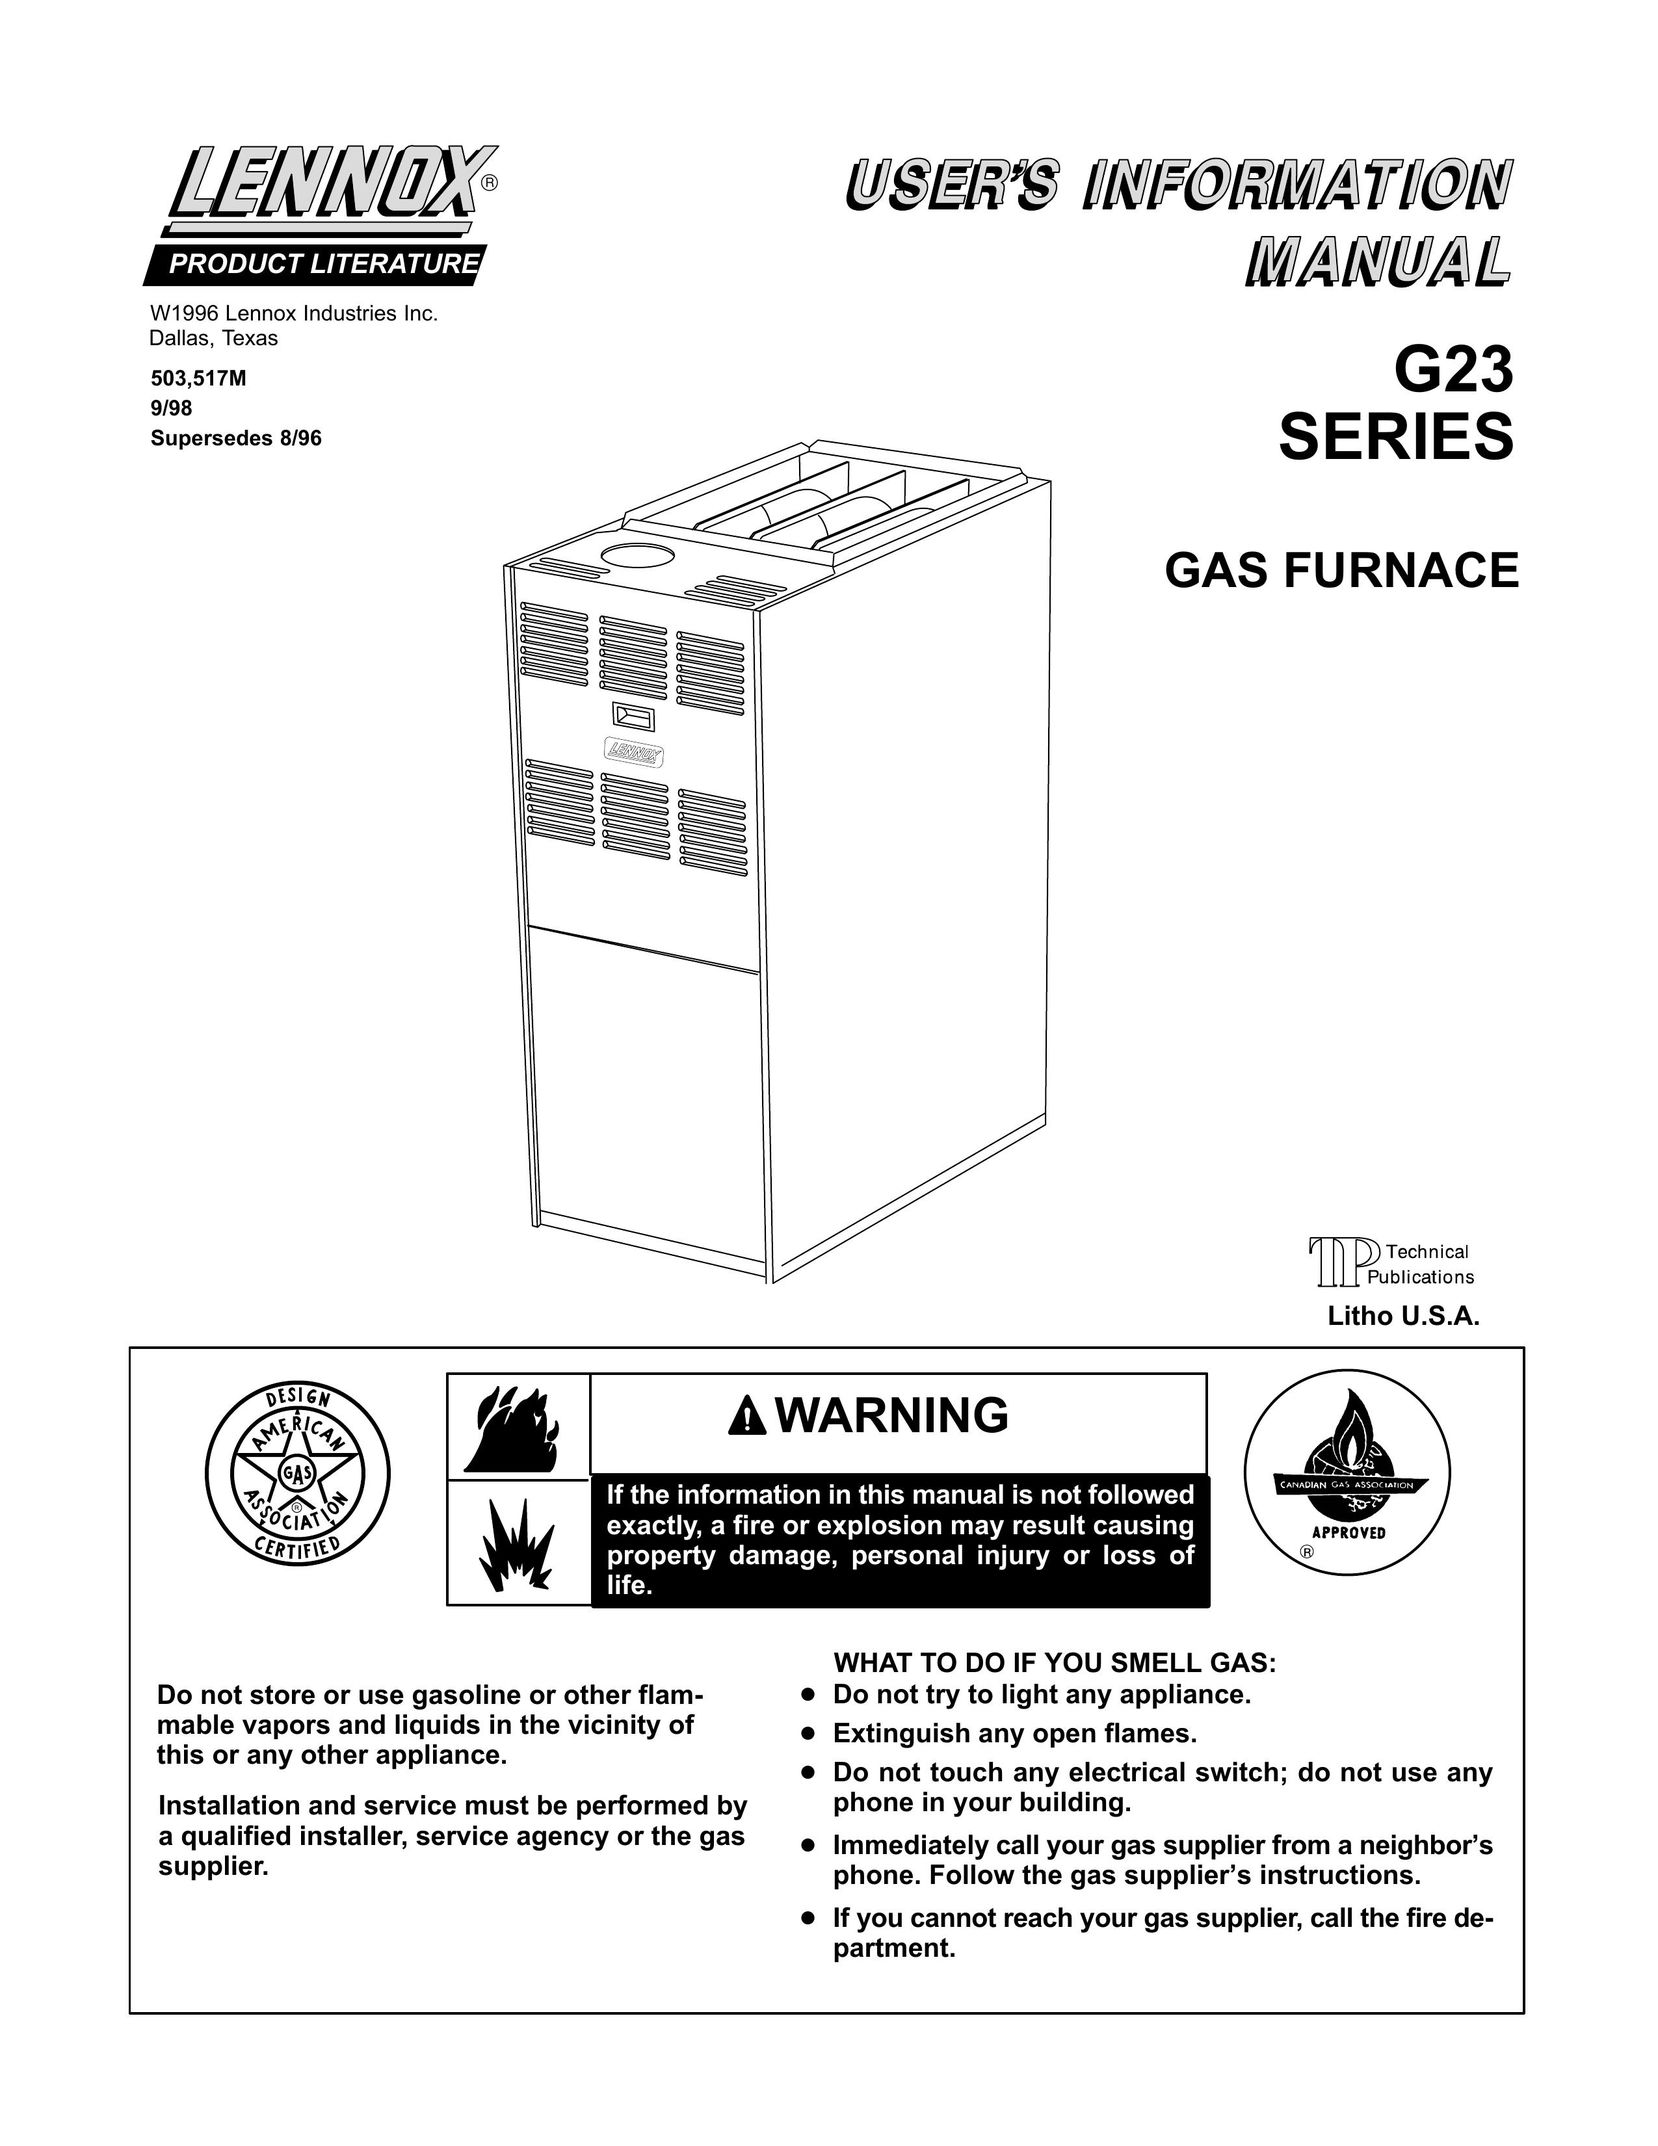 Lennox International Inc. G23 Furnace User Manual